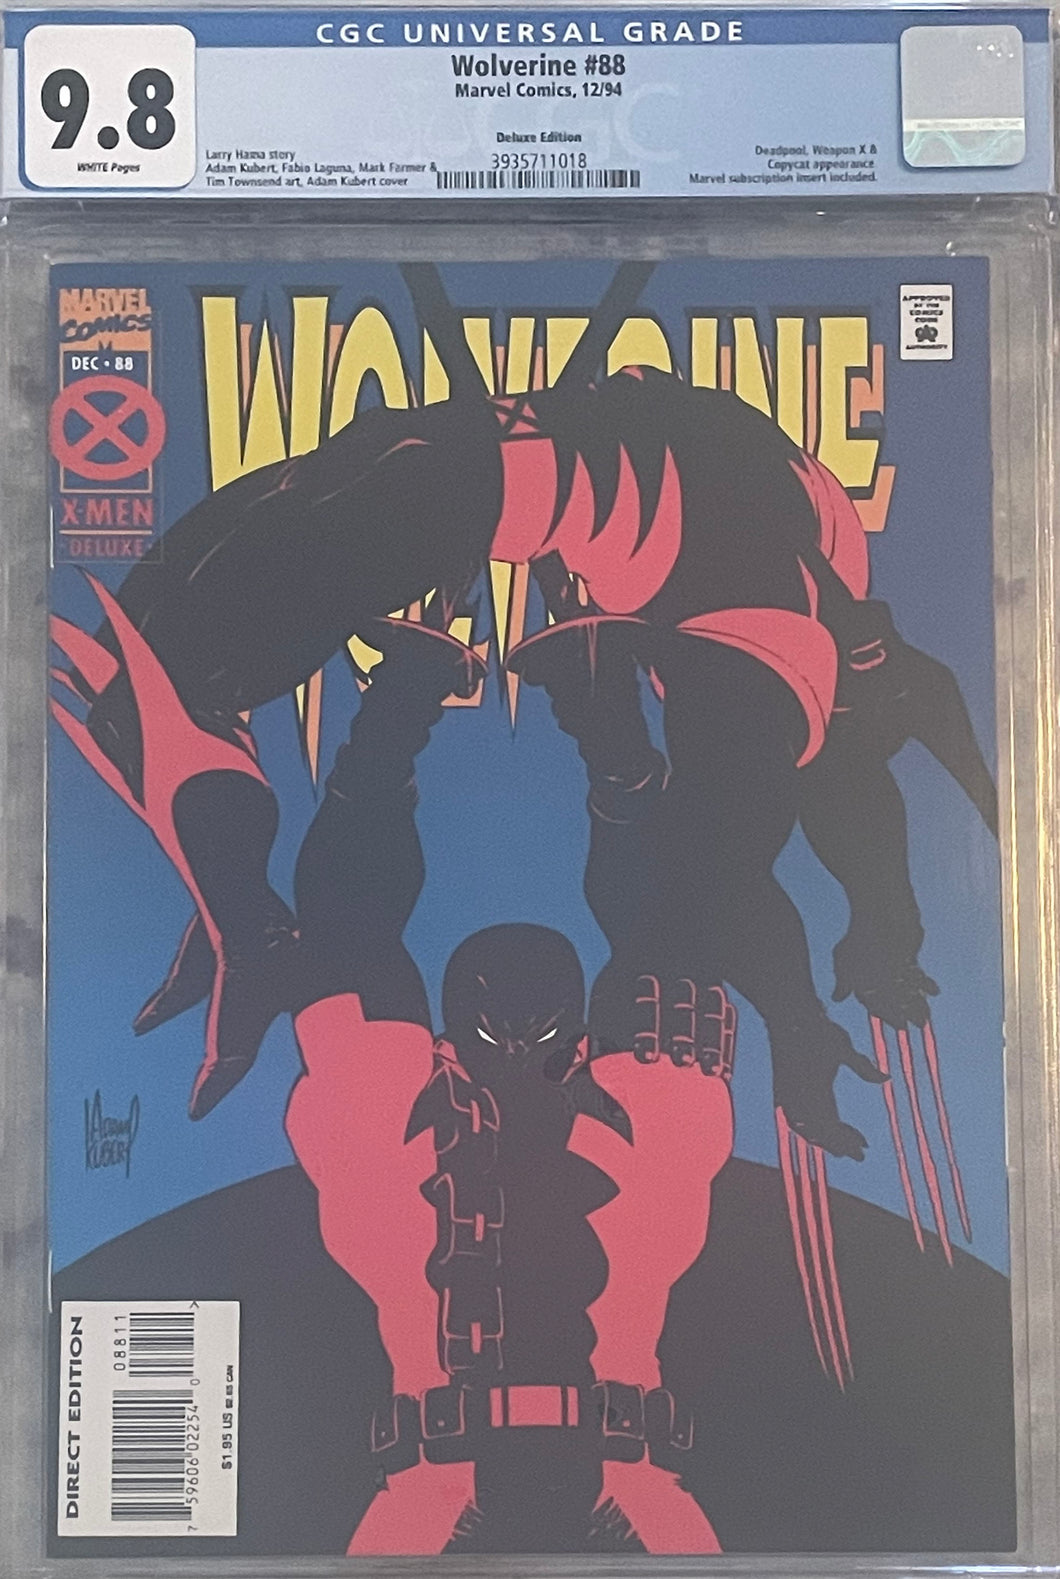 Wolverine #88 9.8 CGC Deluxe Edition